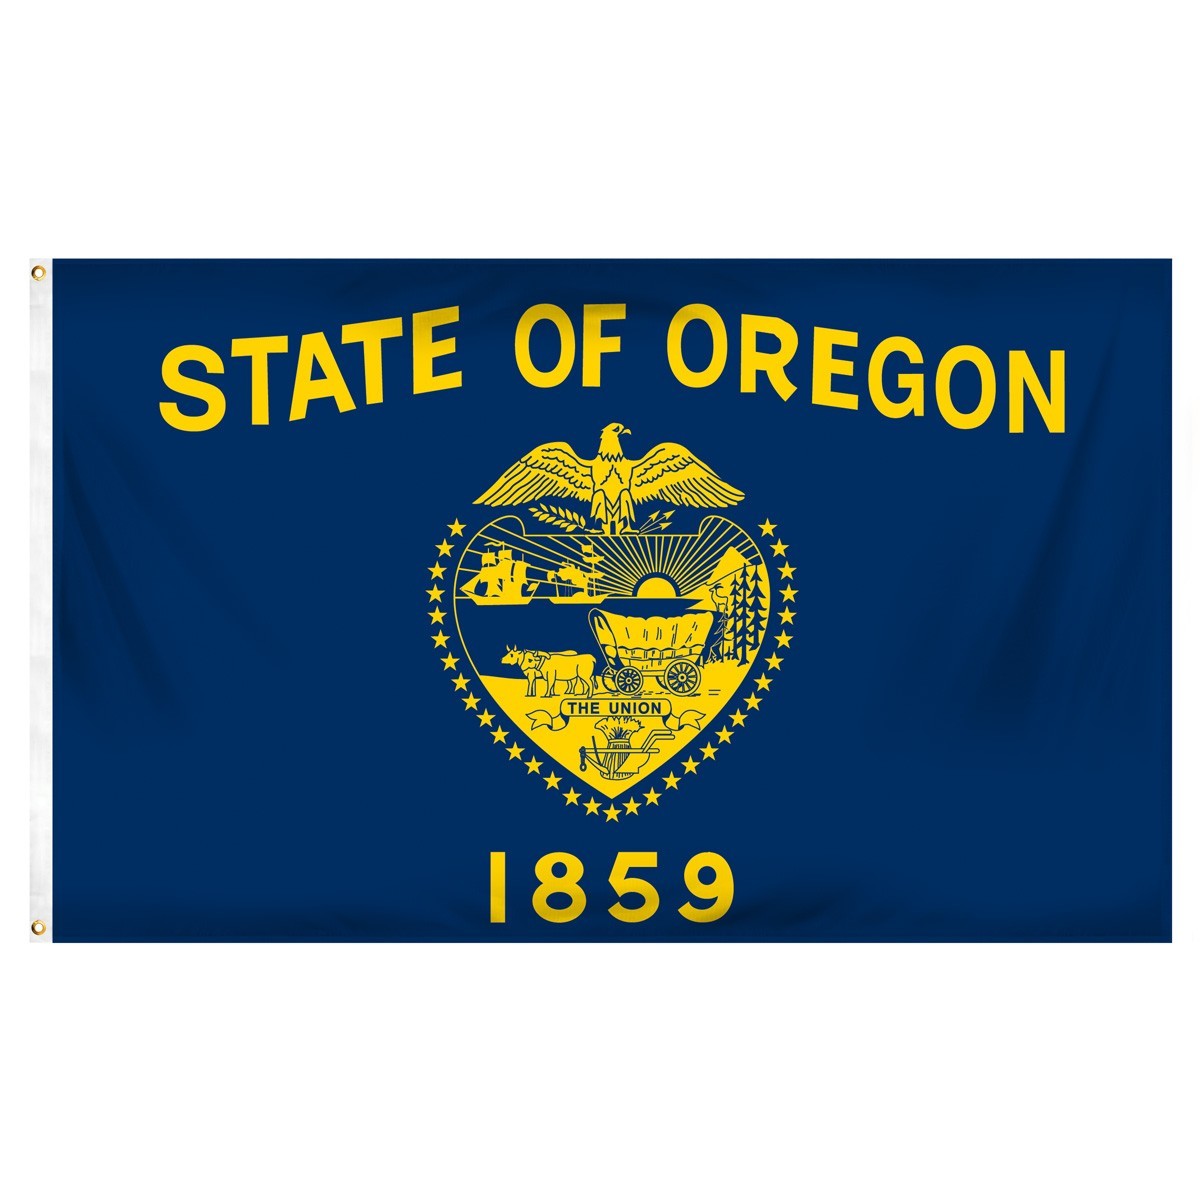 Oregon school flag for sale